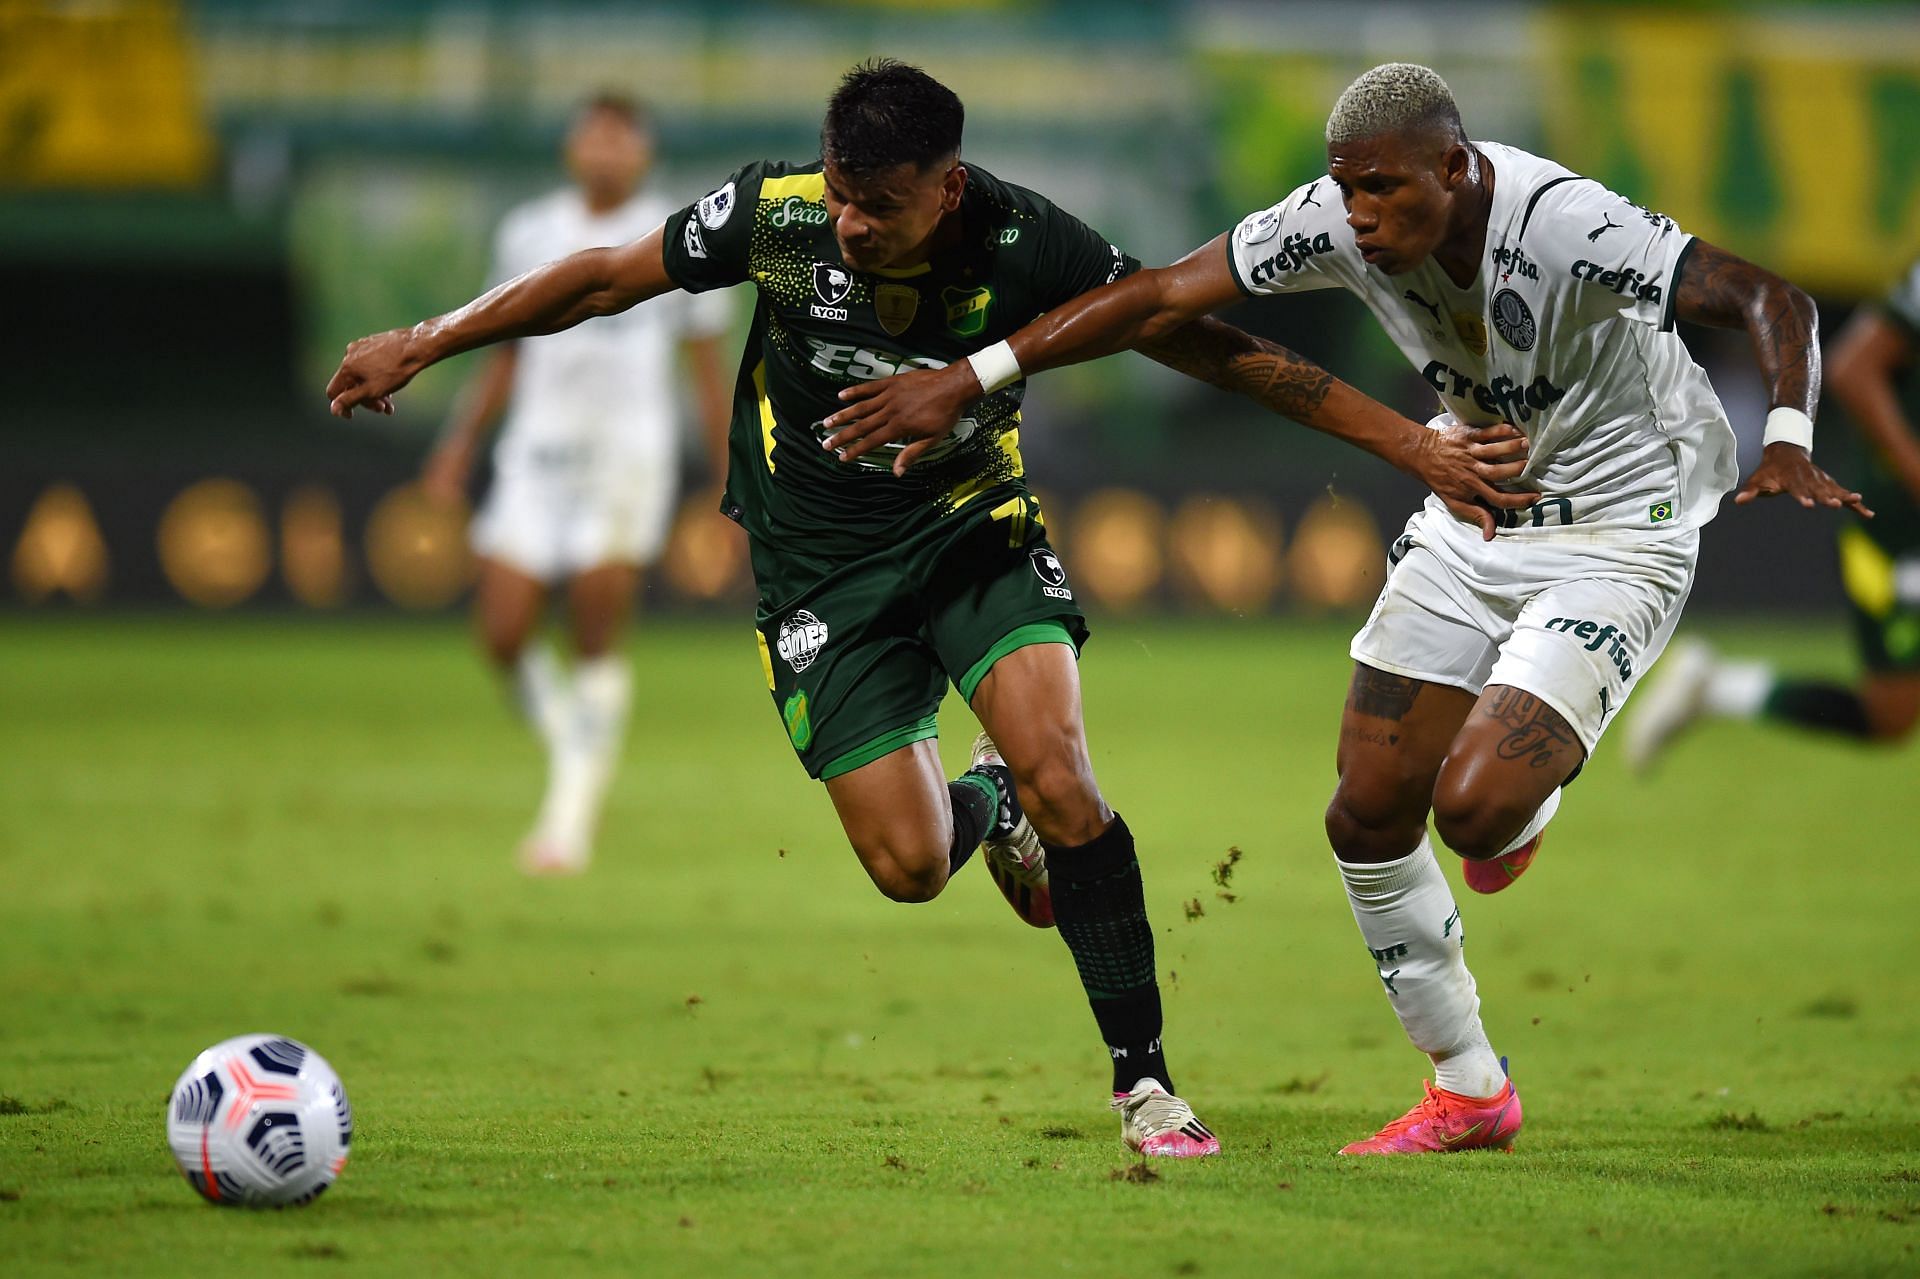 Palmeiras take on Santos on Sunday